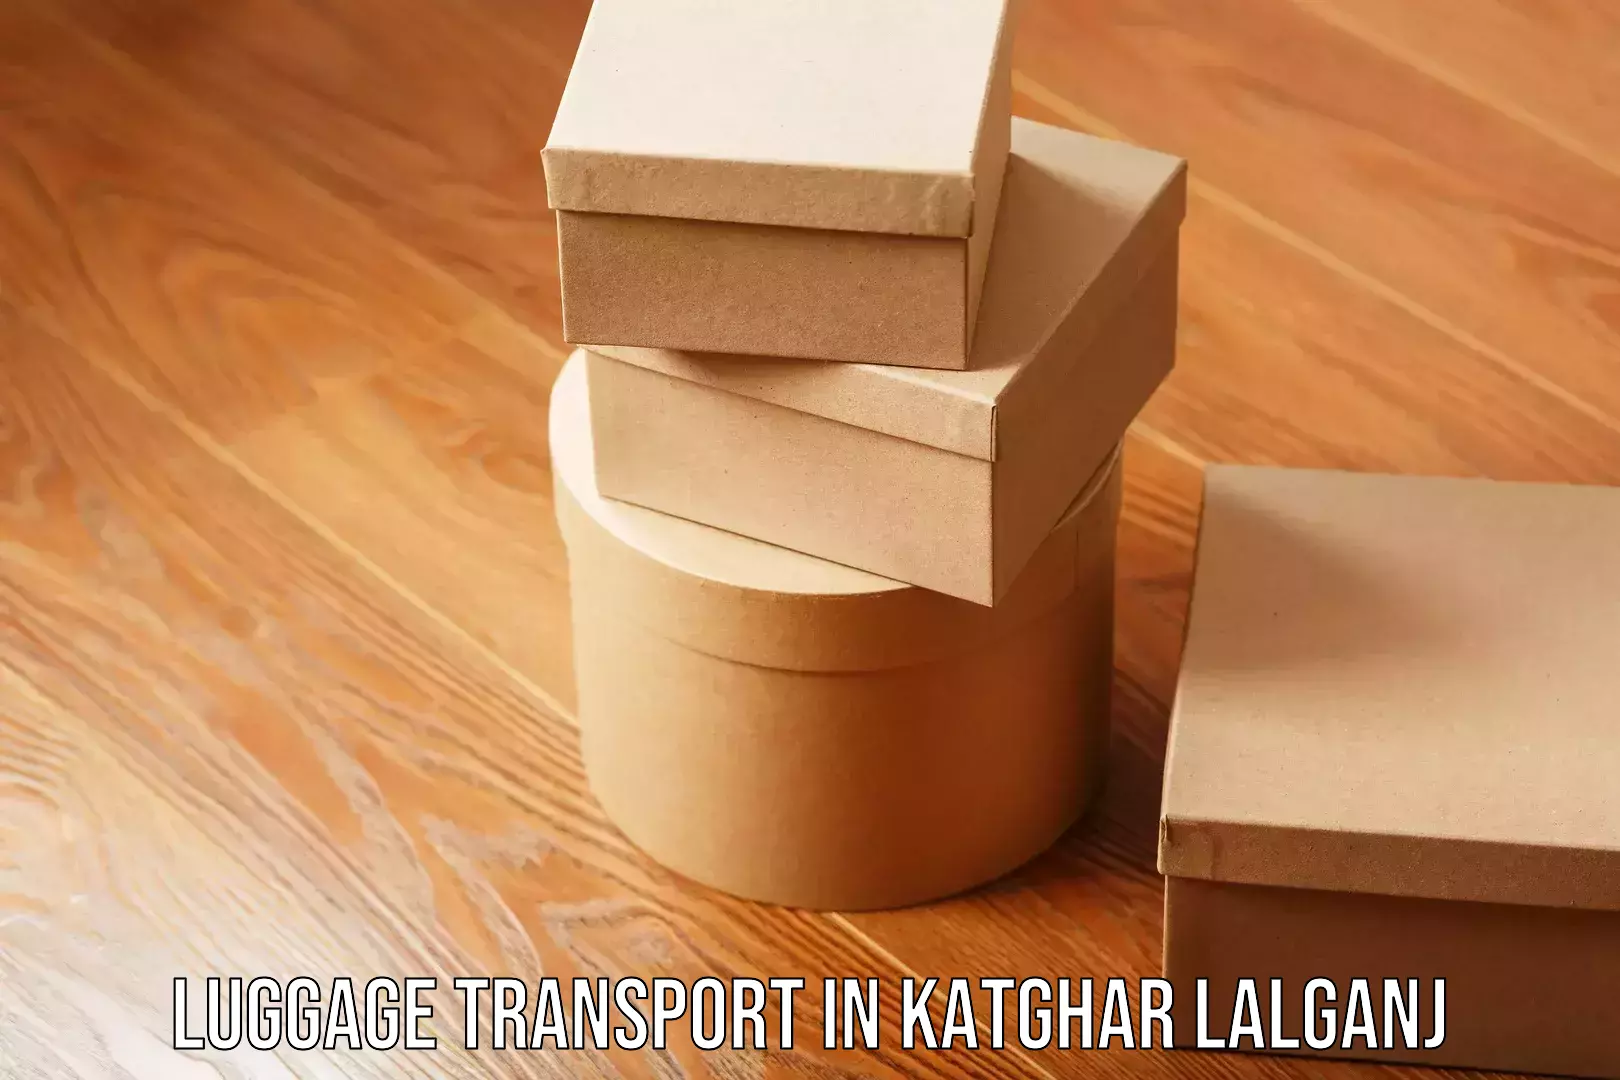 Heavy luggage shipping in Katghar Lalganj